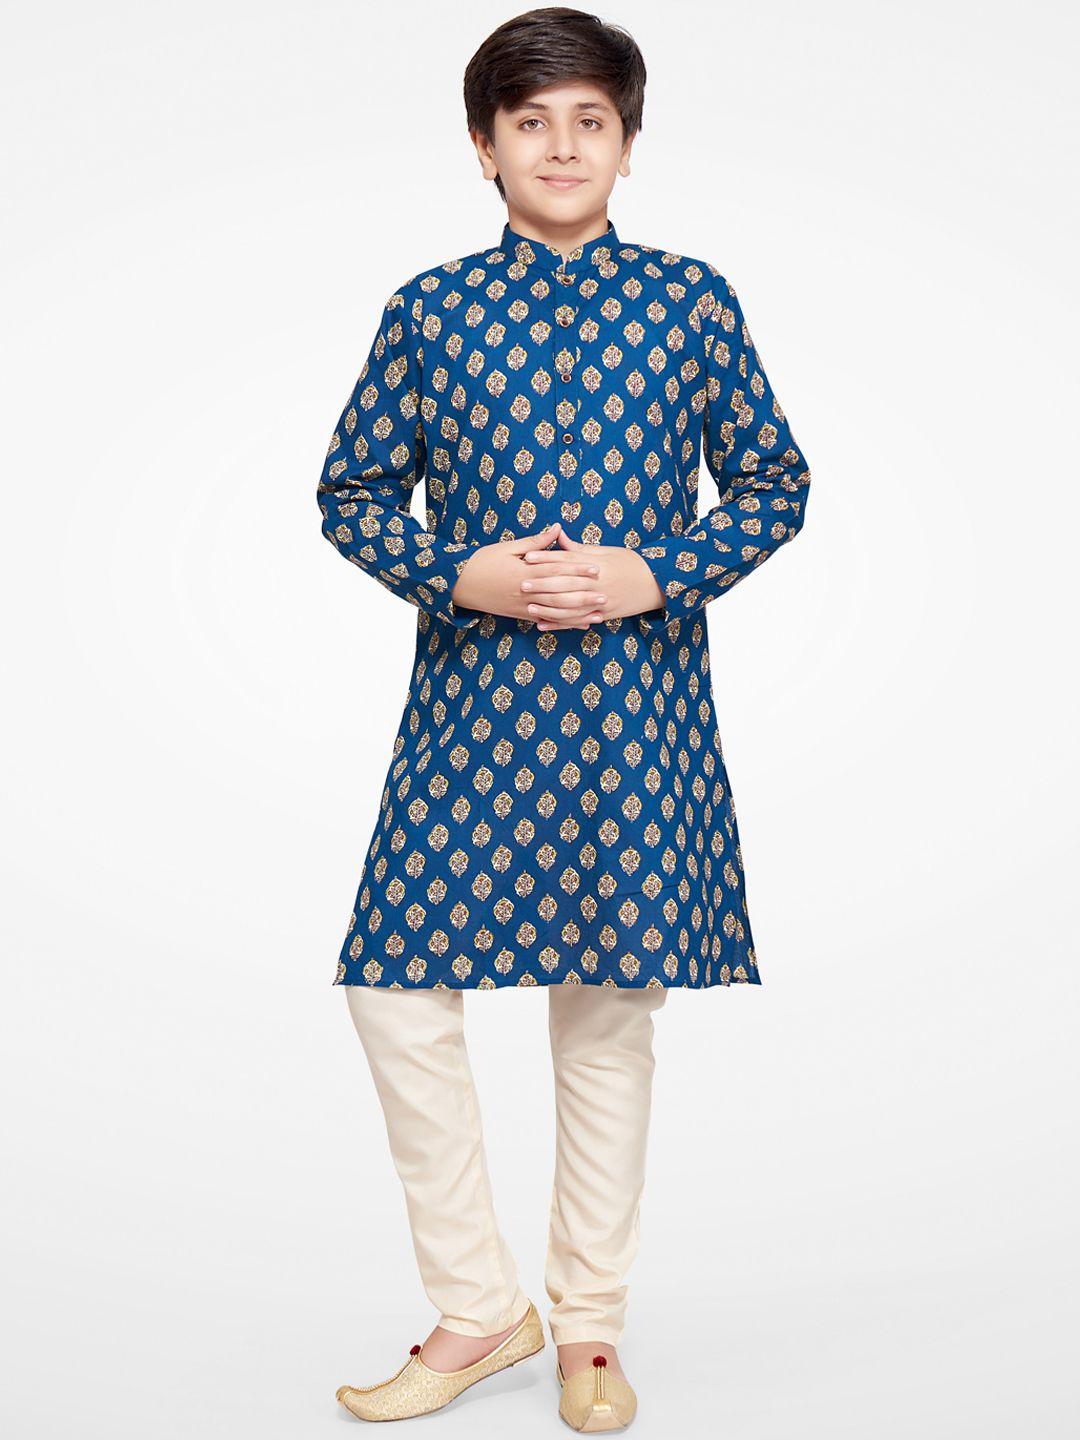 jeetethnics boys blue ethnic motifs printed kurta with pyjamas